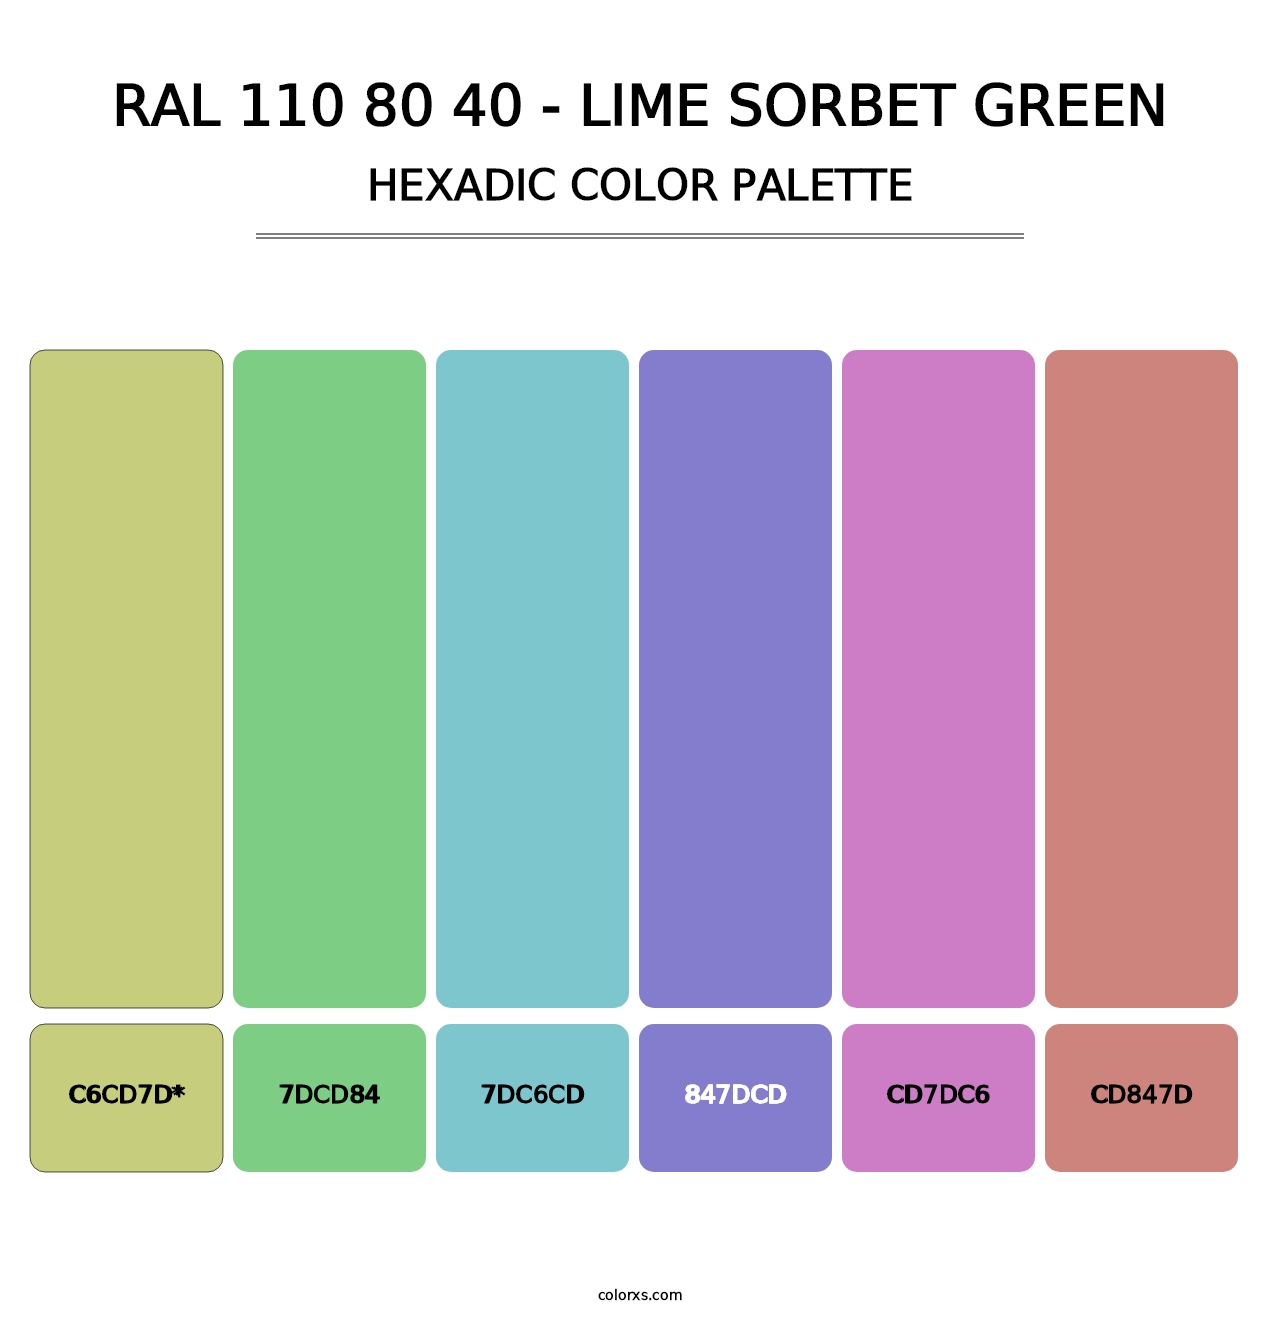 RAL 110 80 40 - Lime Sorbet Green - Hexadic Color Palette